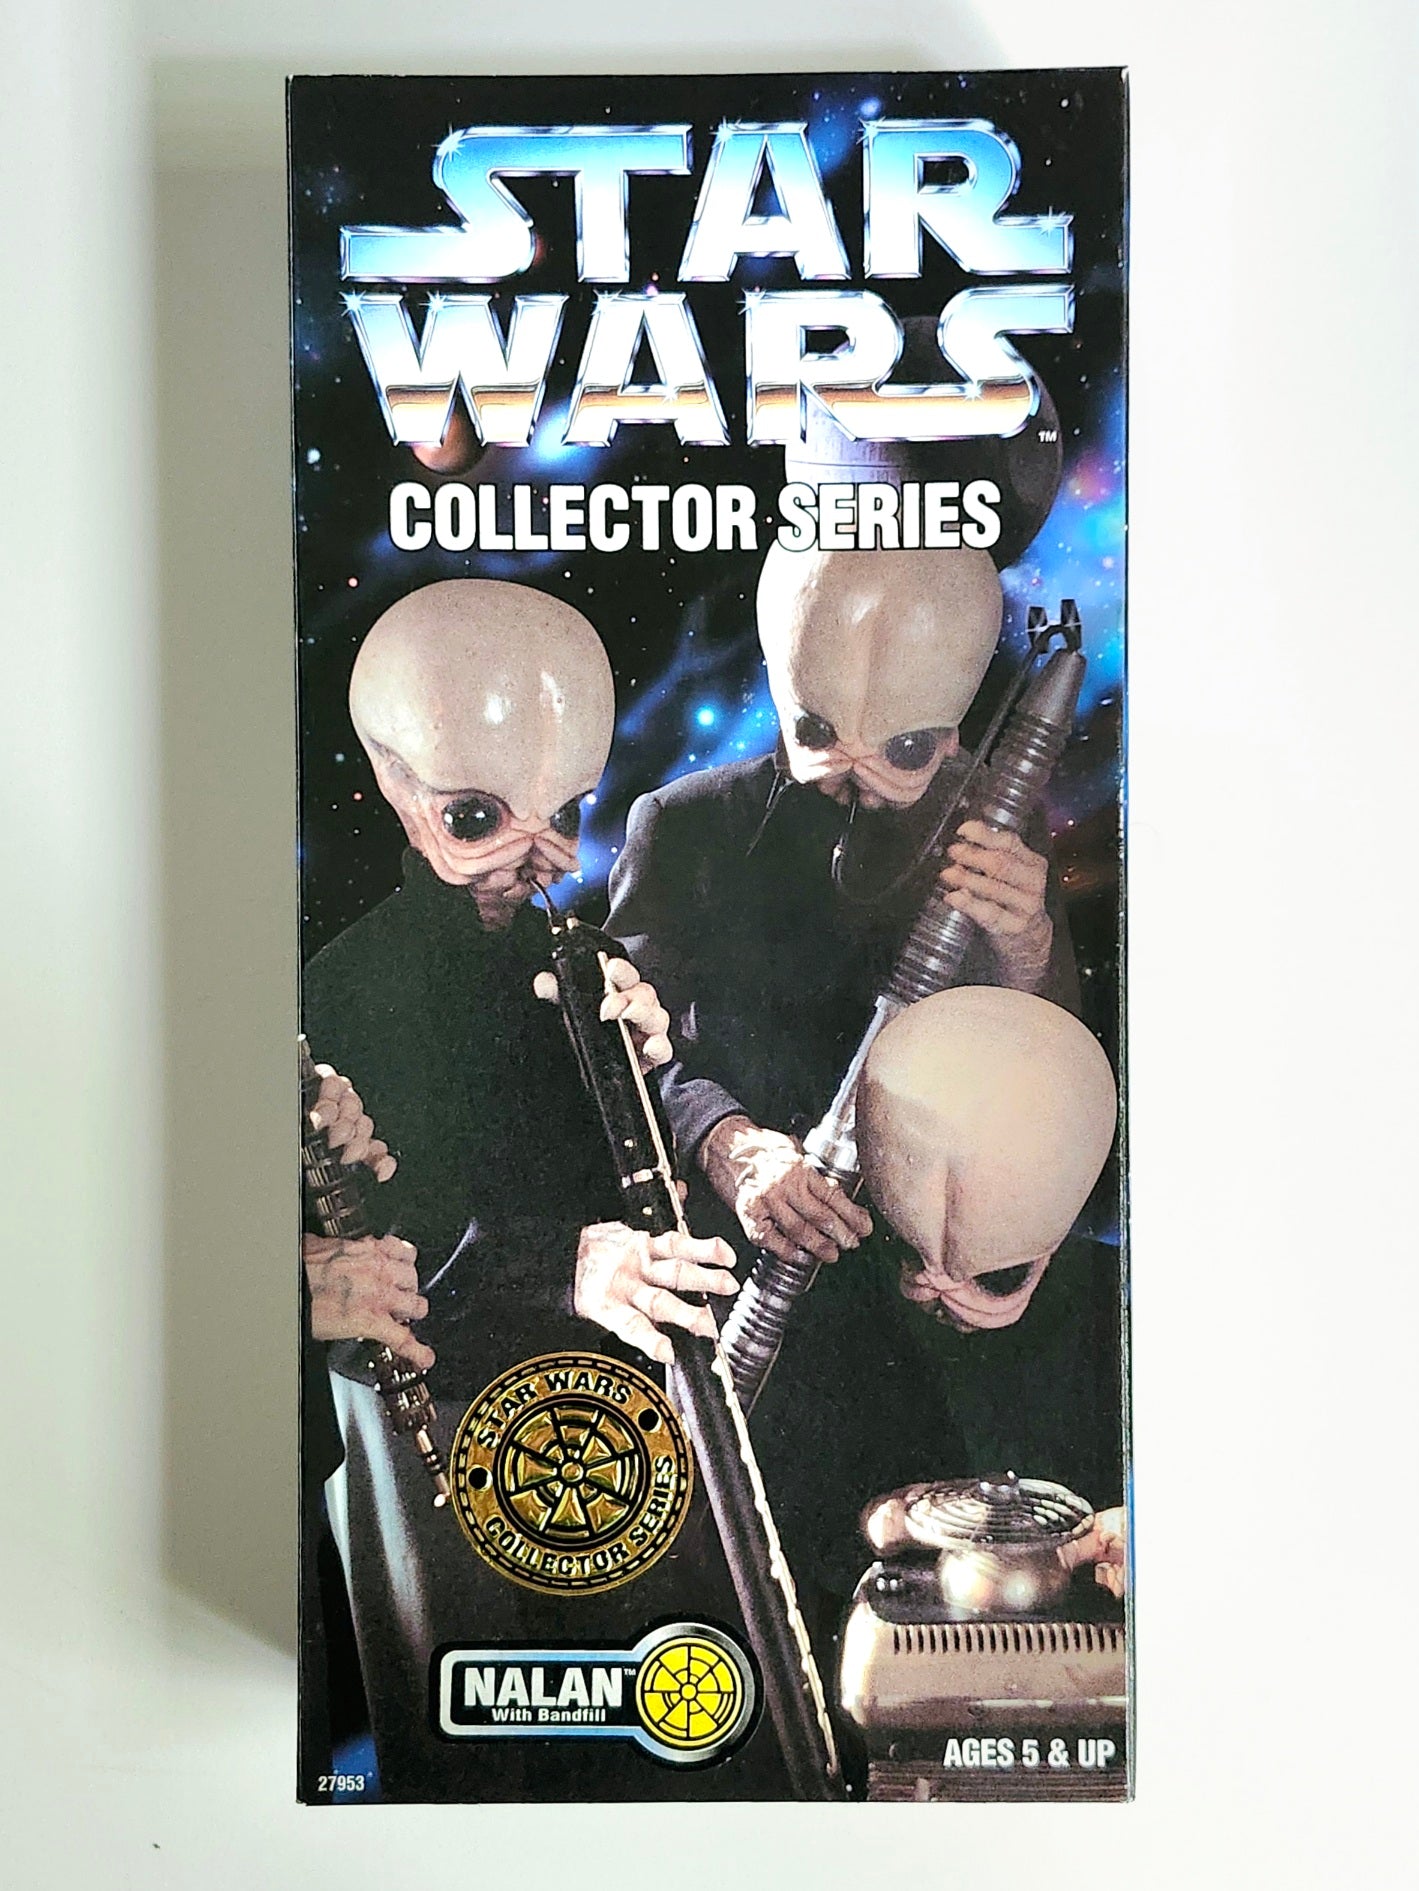 Star Wars Collector Series Cantina Band Member Nalan 12-Inch Action Figure